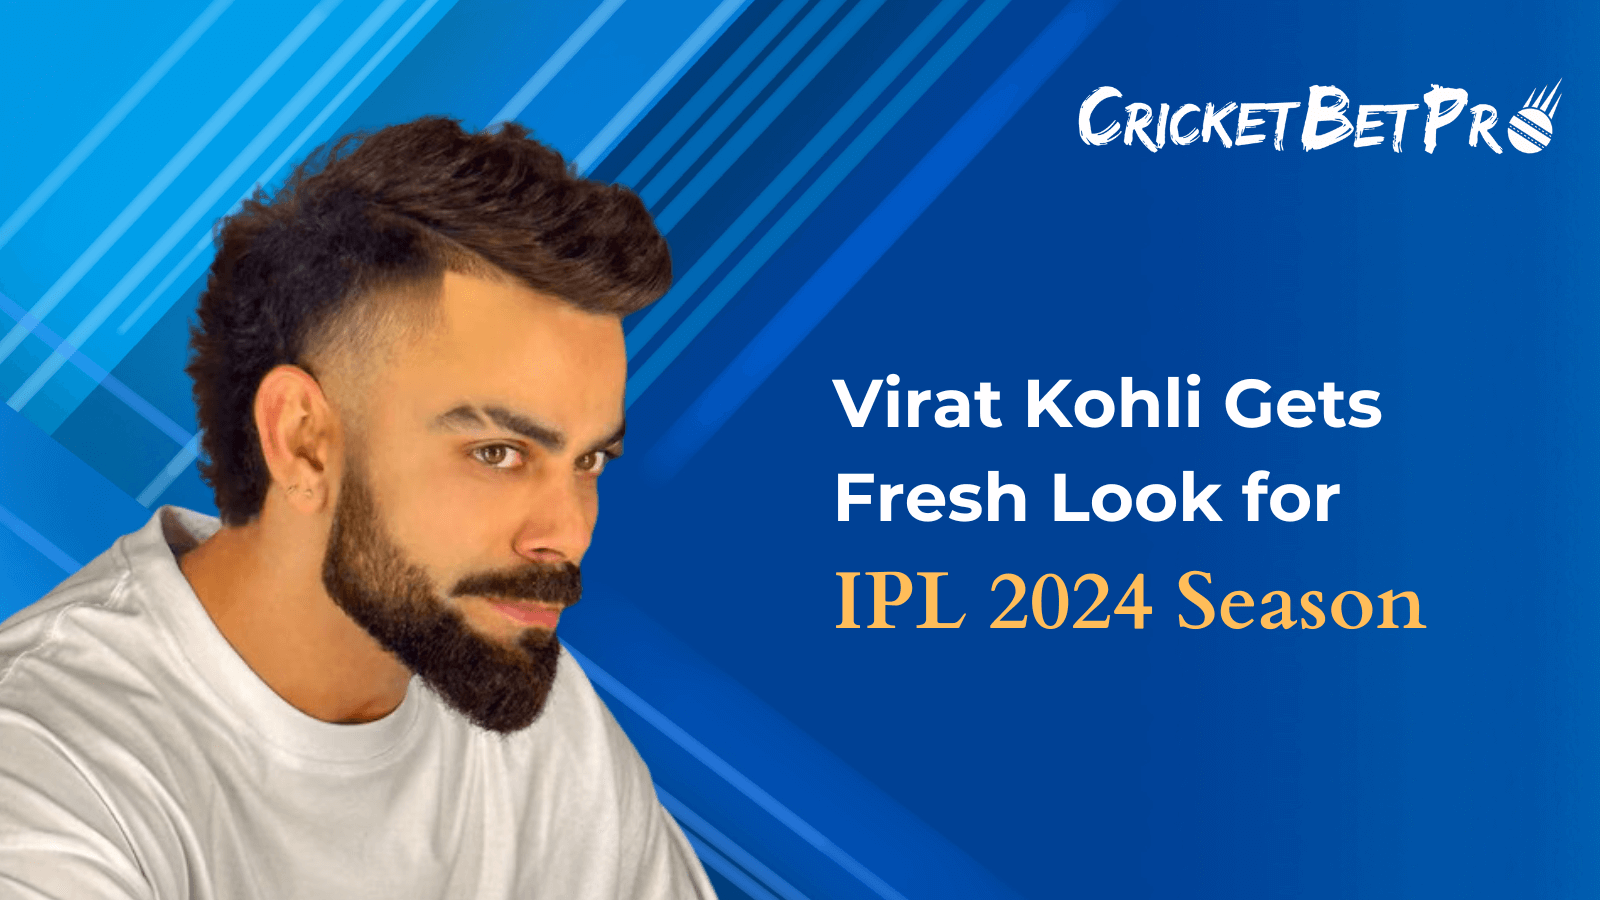 Virat Kohli Gets Fresh Look for IPL 2024 Season